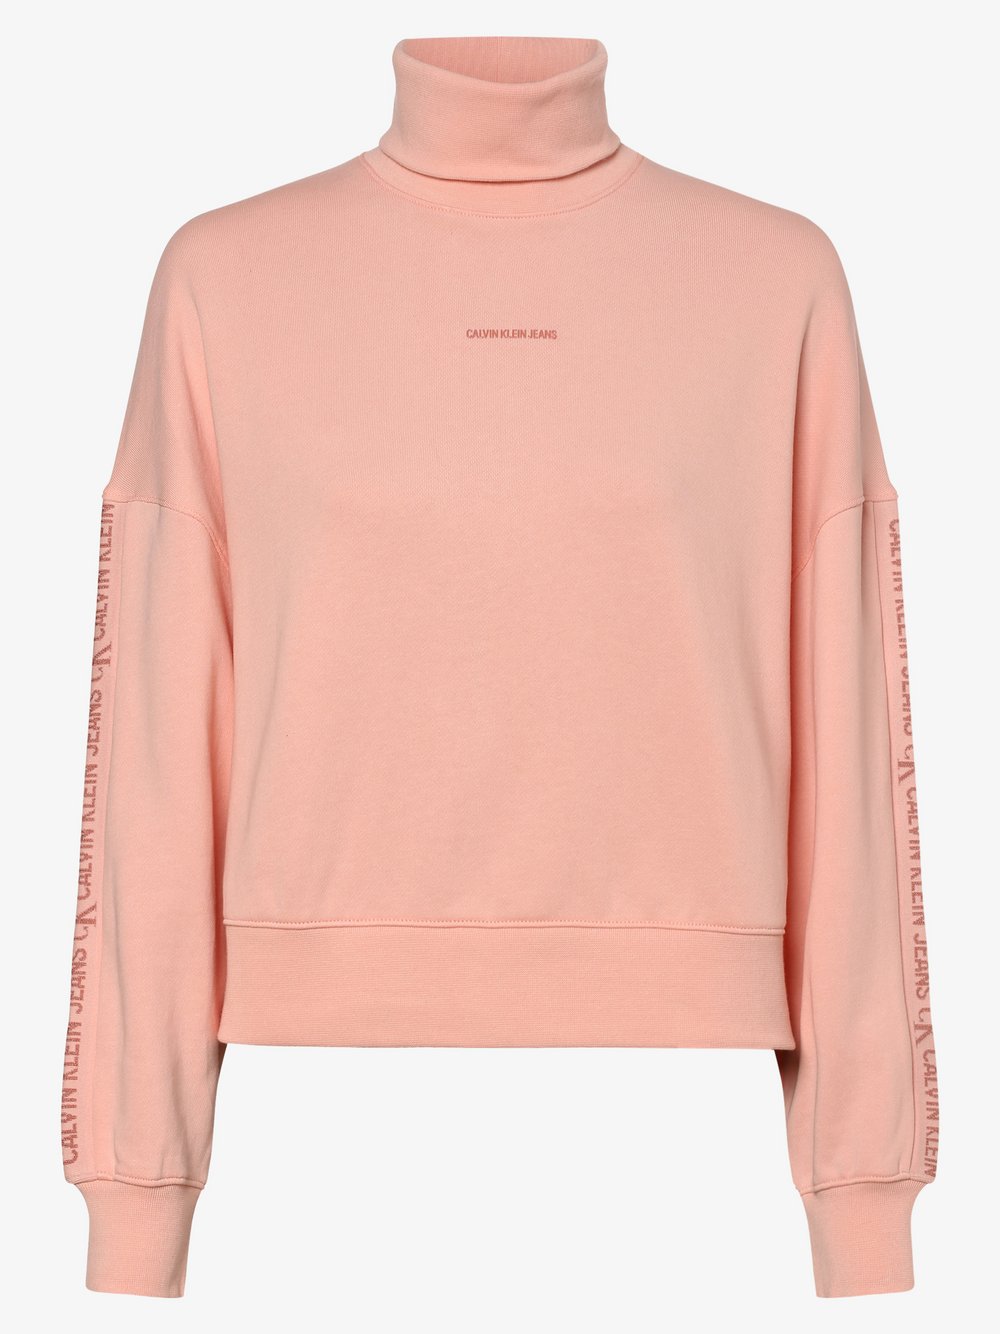 Calvin Klein Jeans - Damska bluza nierozpinana, różowy